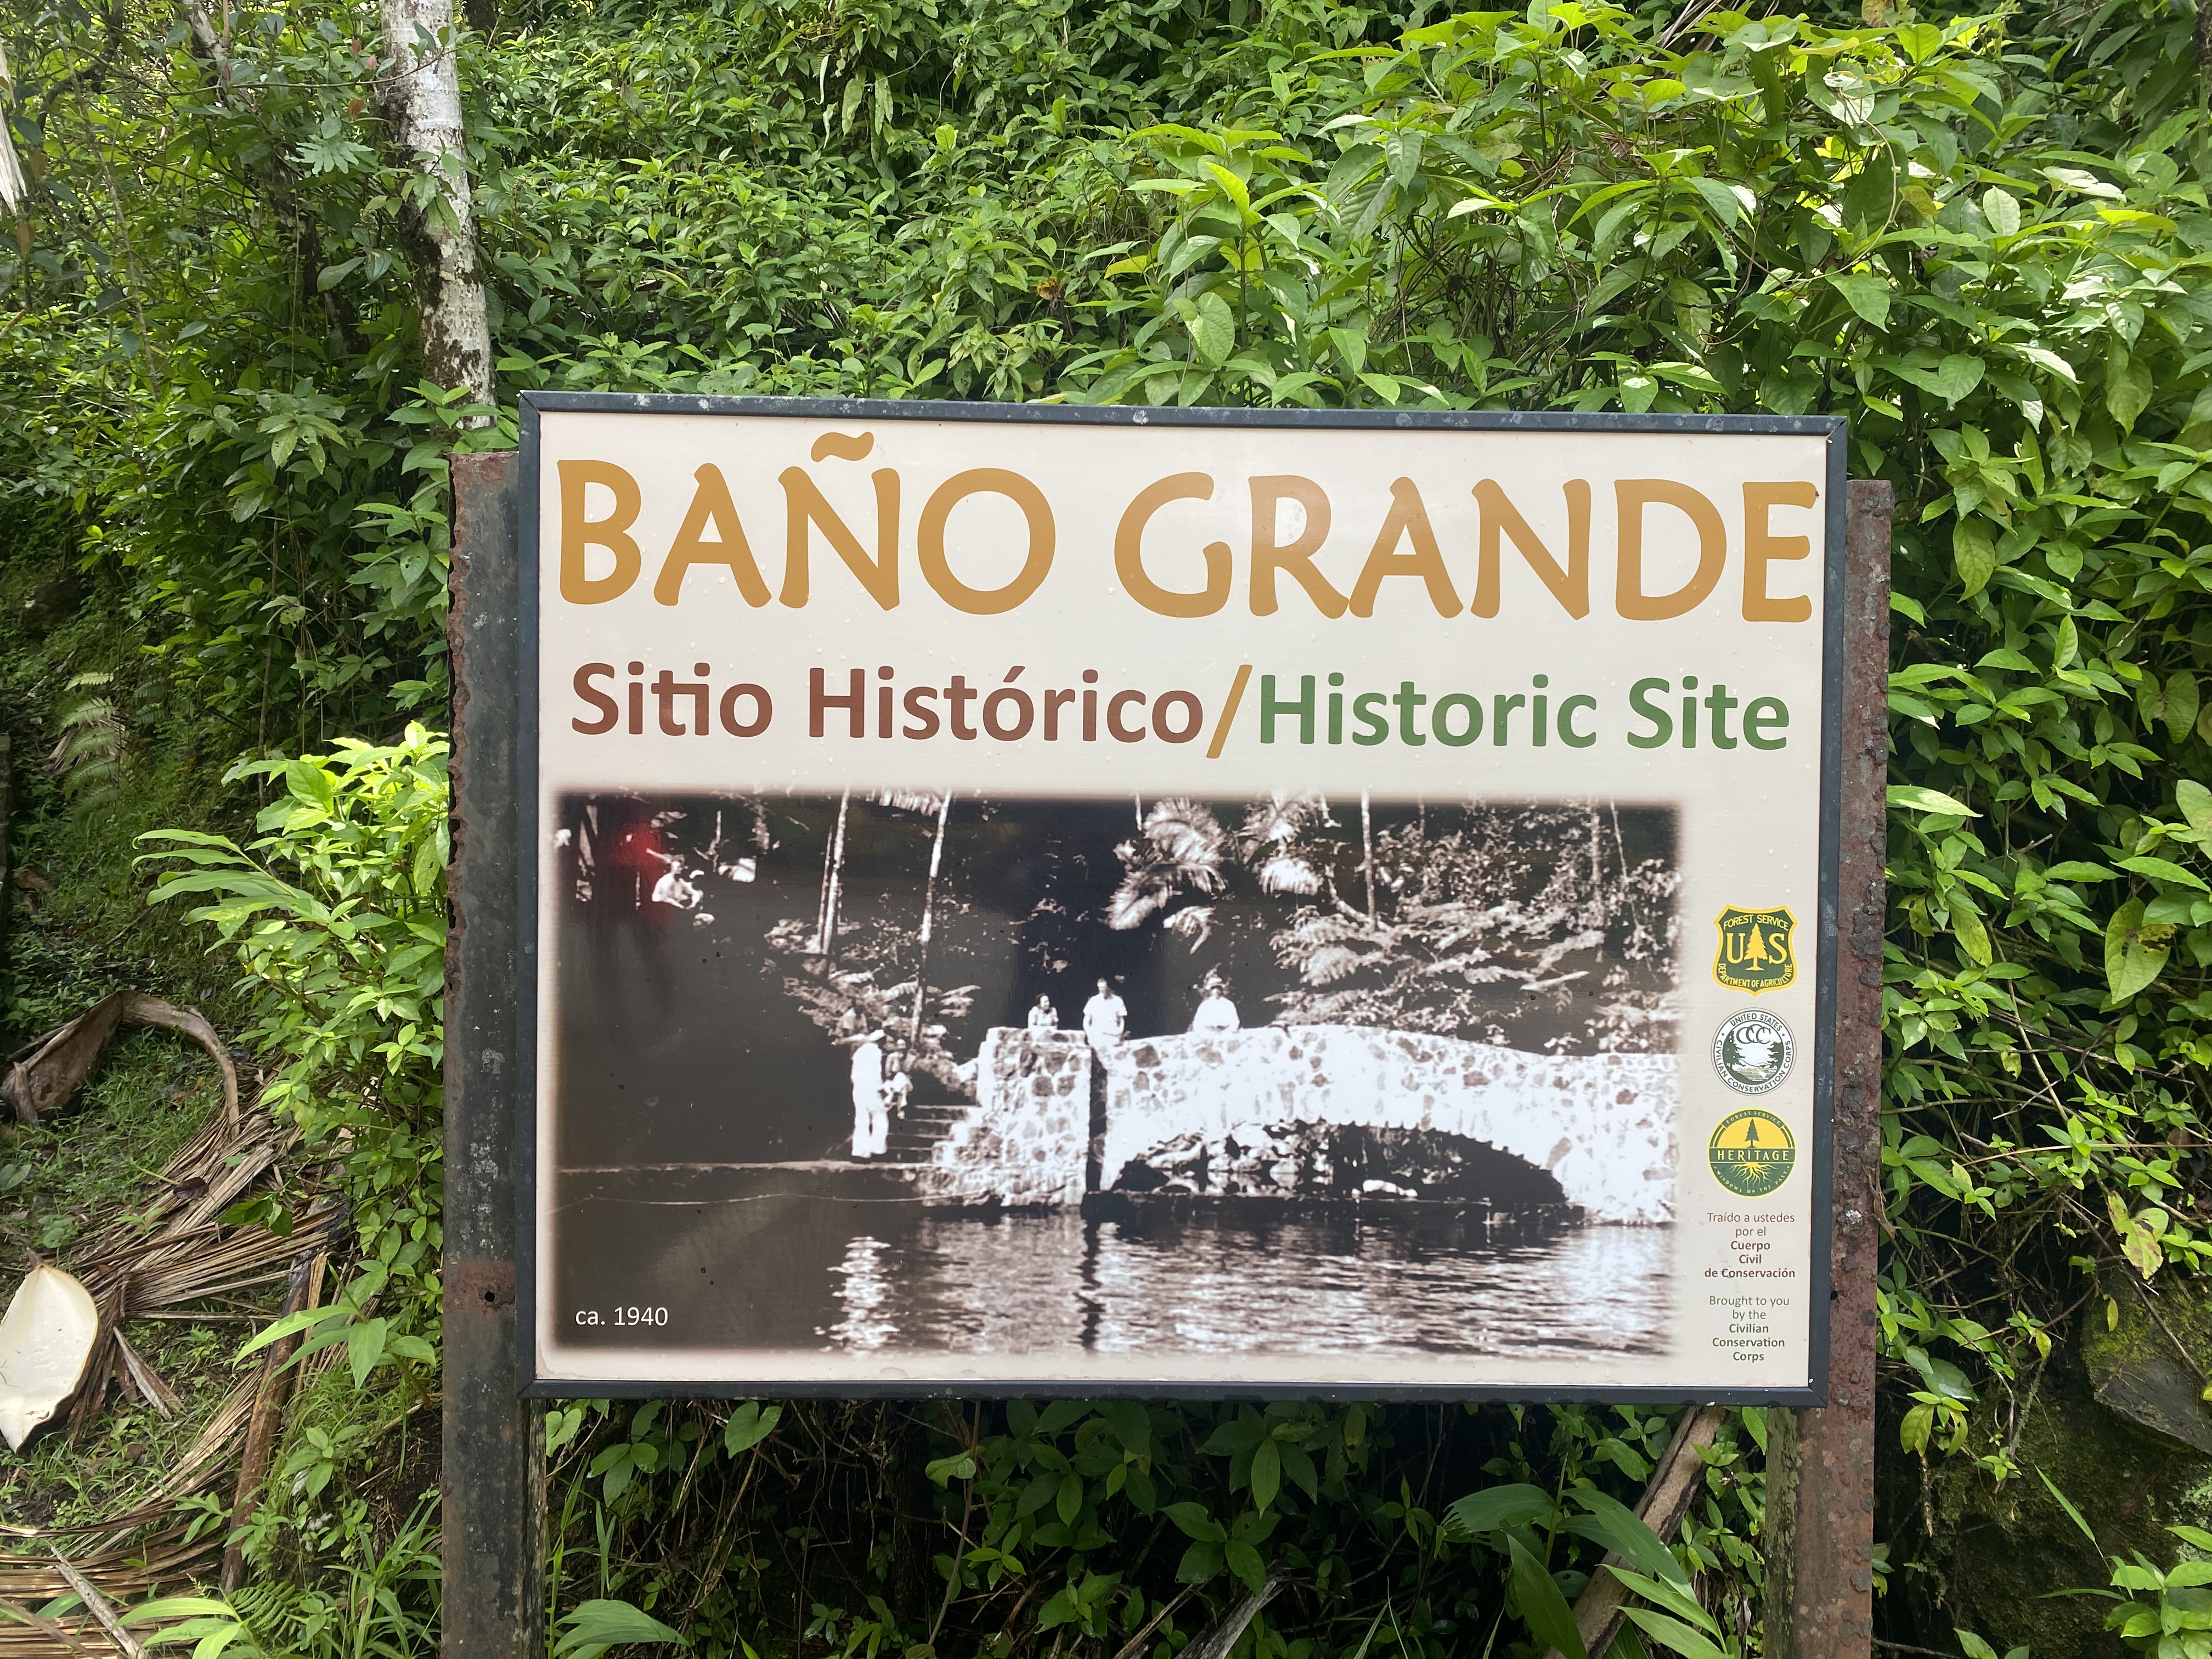 Bano Grande signage